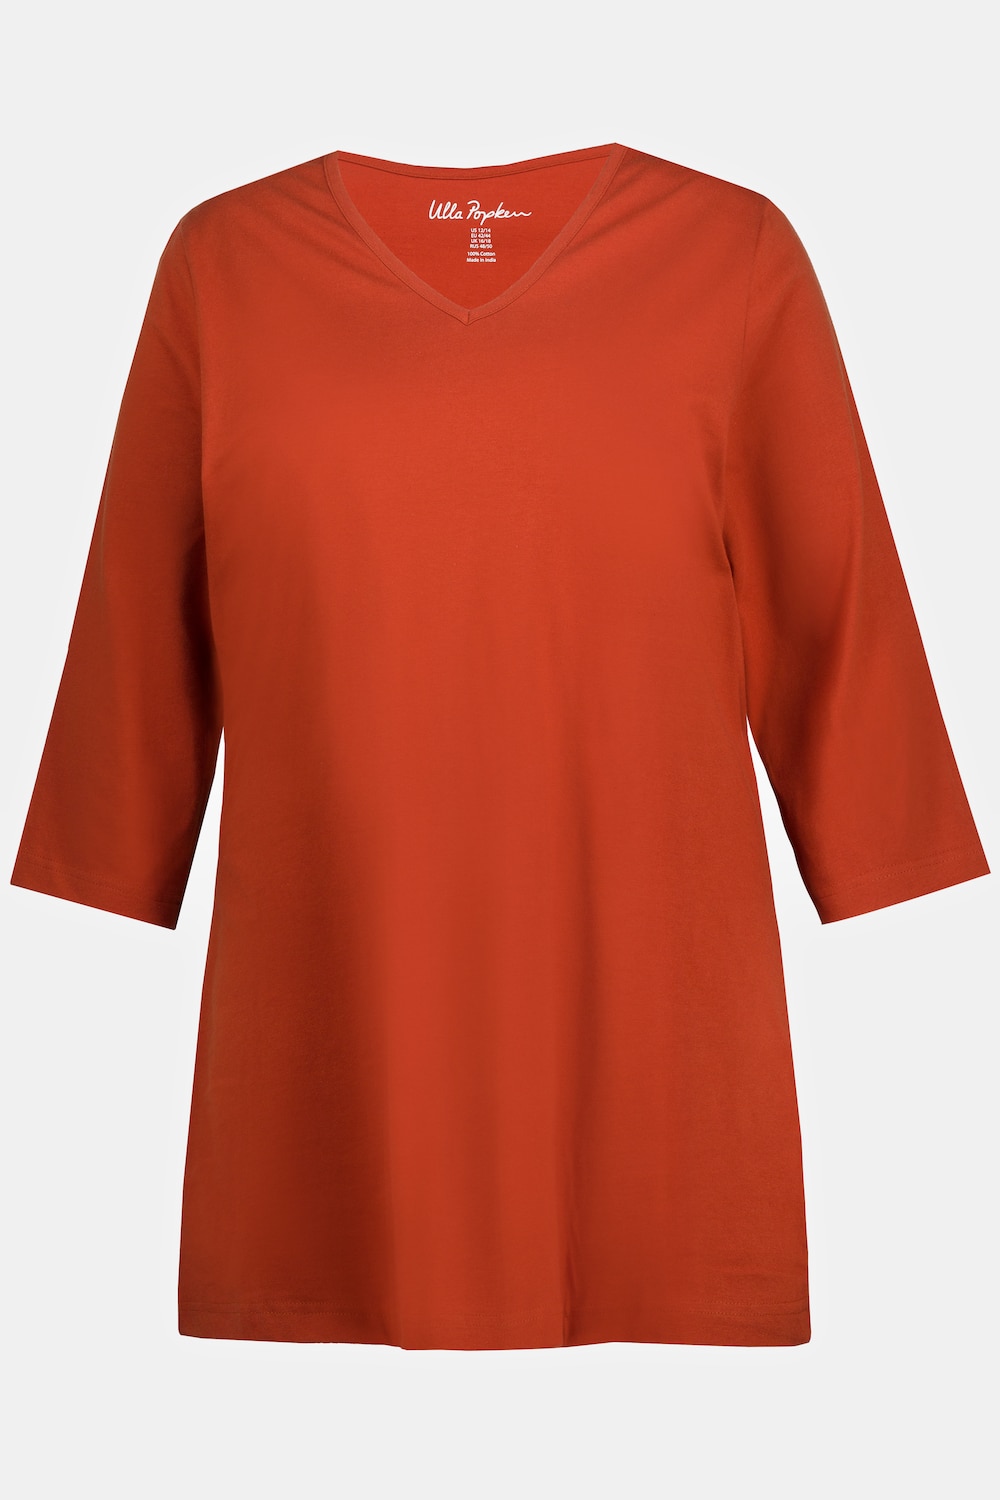 Grote Maten longline shirt, Dames, oranje, Maat: 46/48, Katoen, Ulla Popken